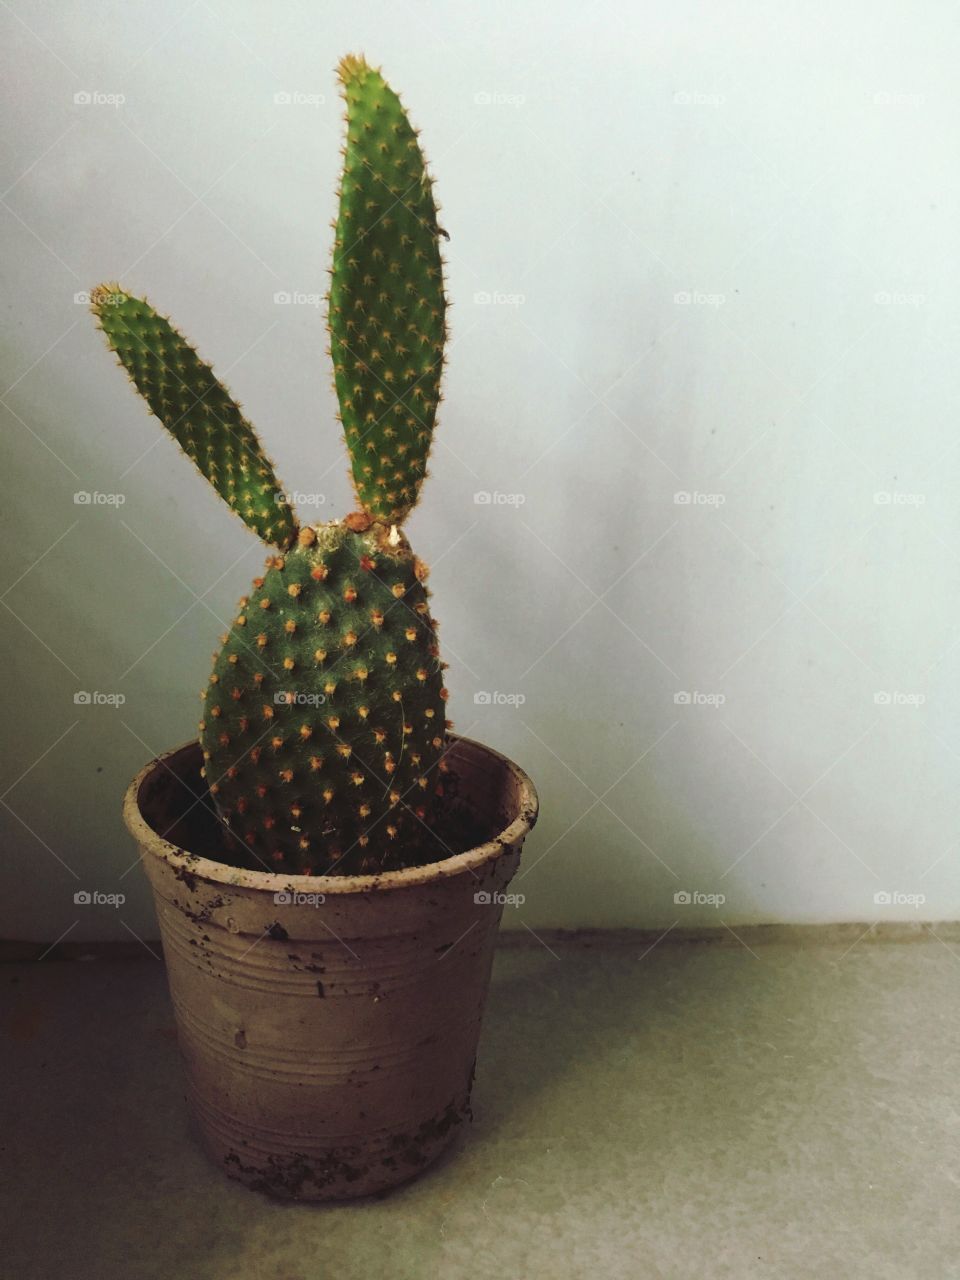 Bunny playboy shape of cactus